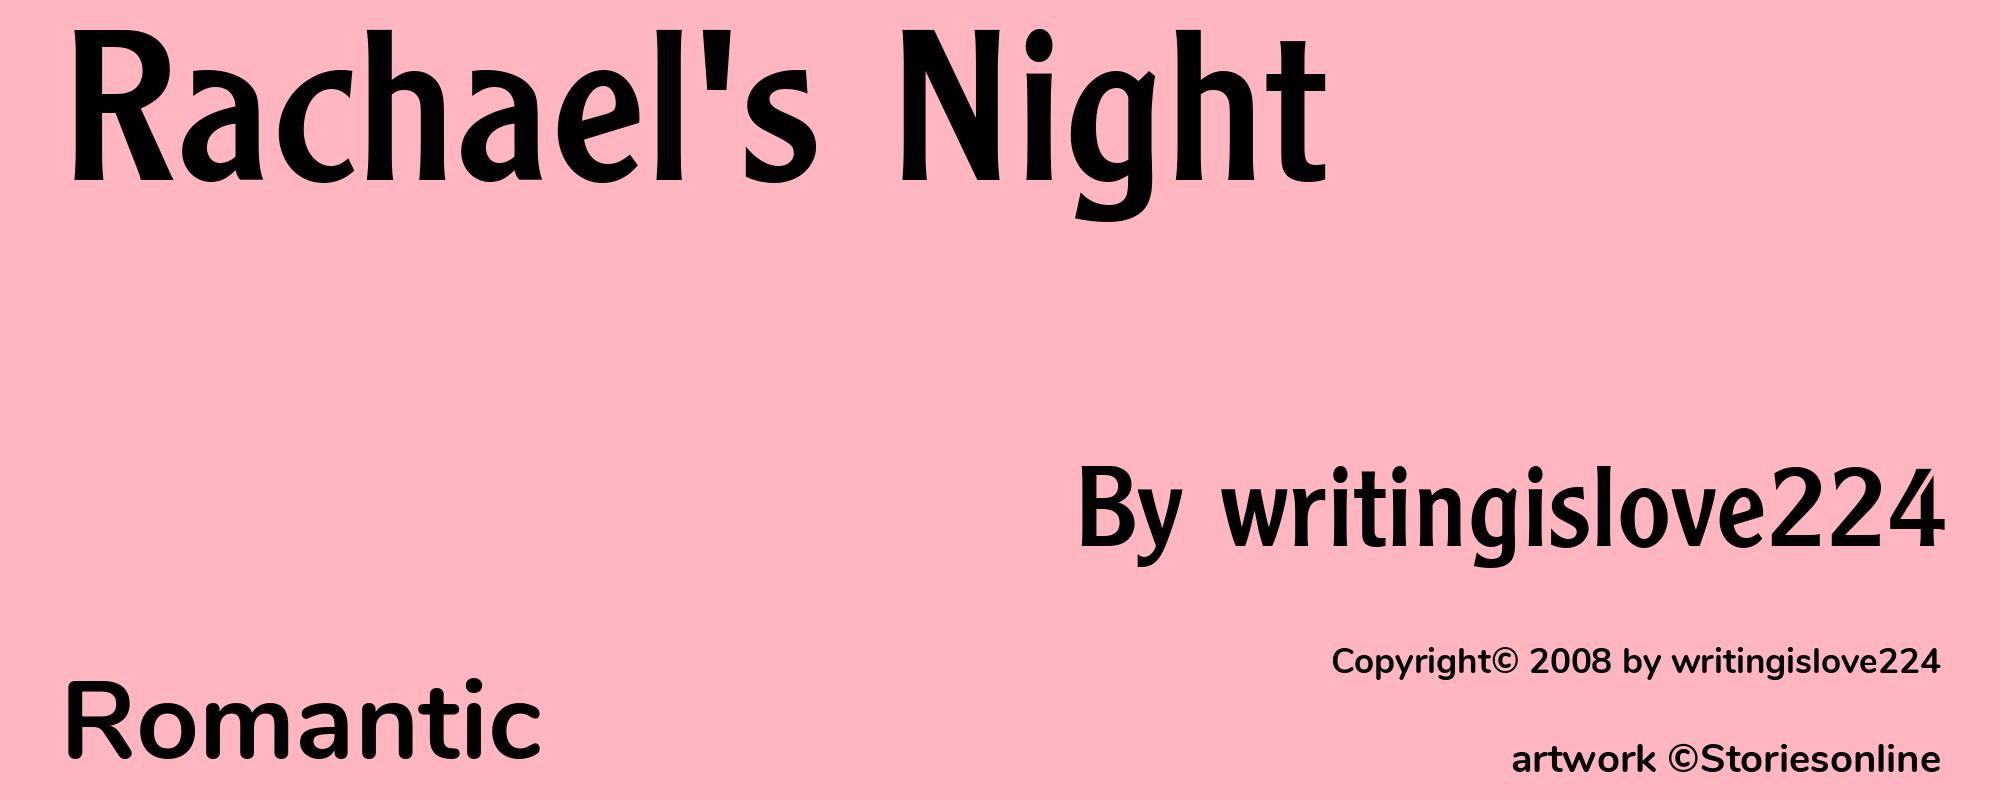 Rachael's Night - Cover